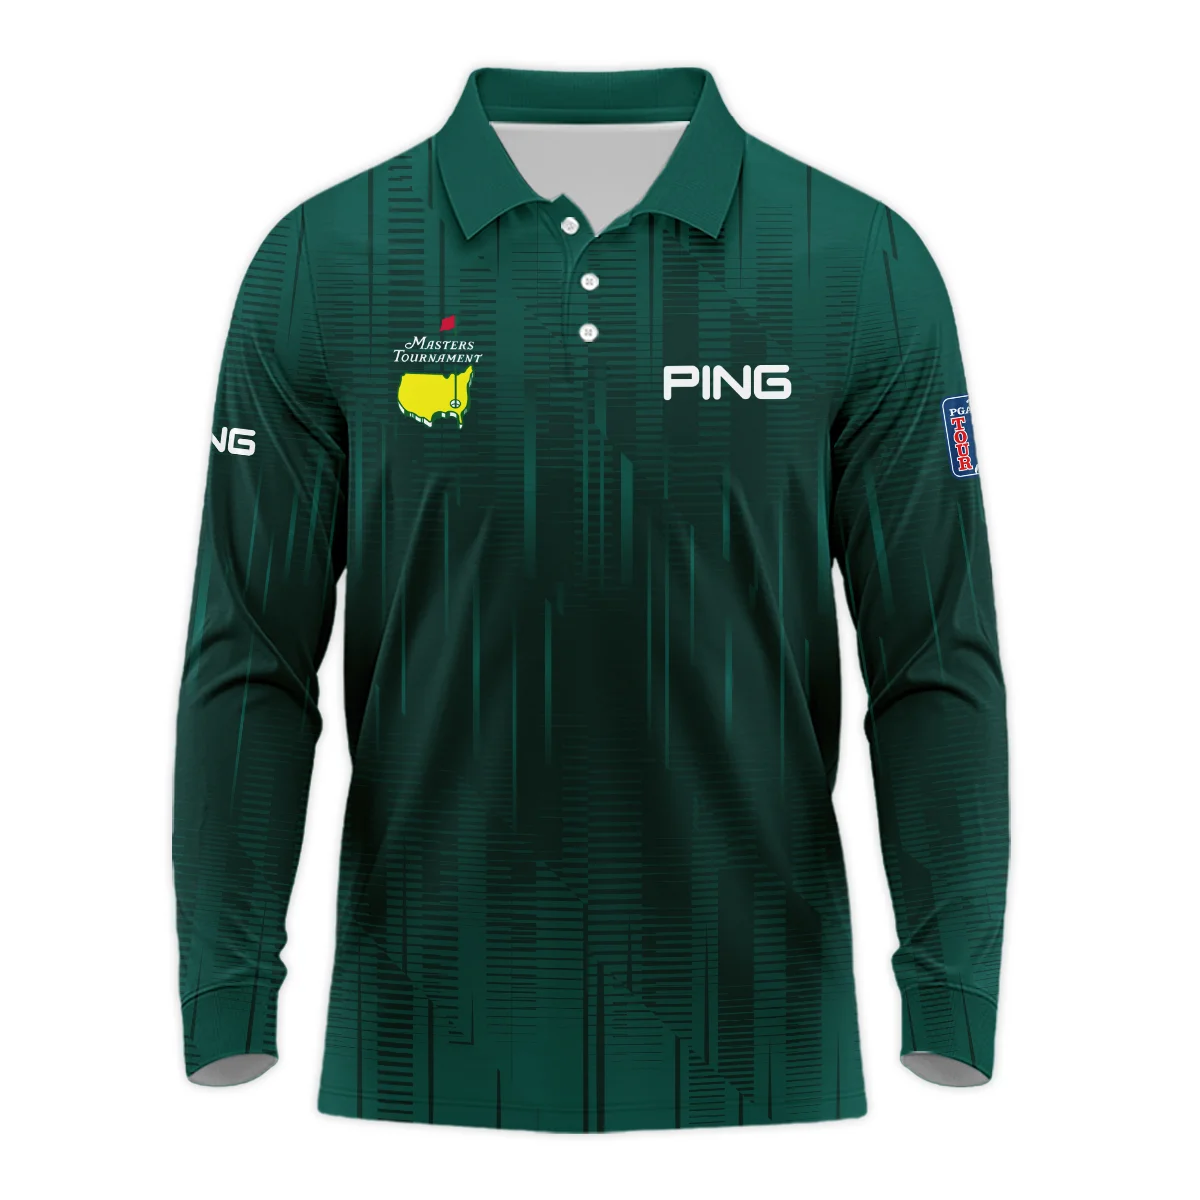 Masters Tournament Ping Dark Green Gradient Stripes Pattern Style Classic Quarter Zipped Sweatshirt